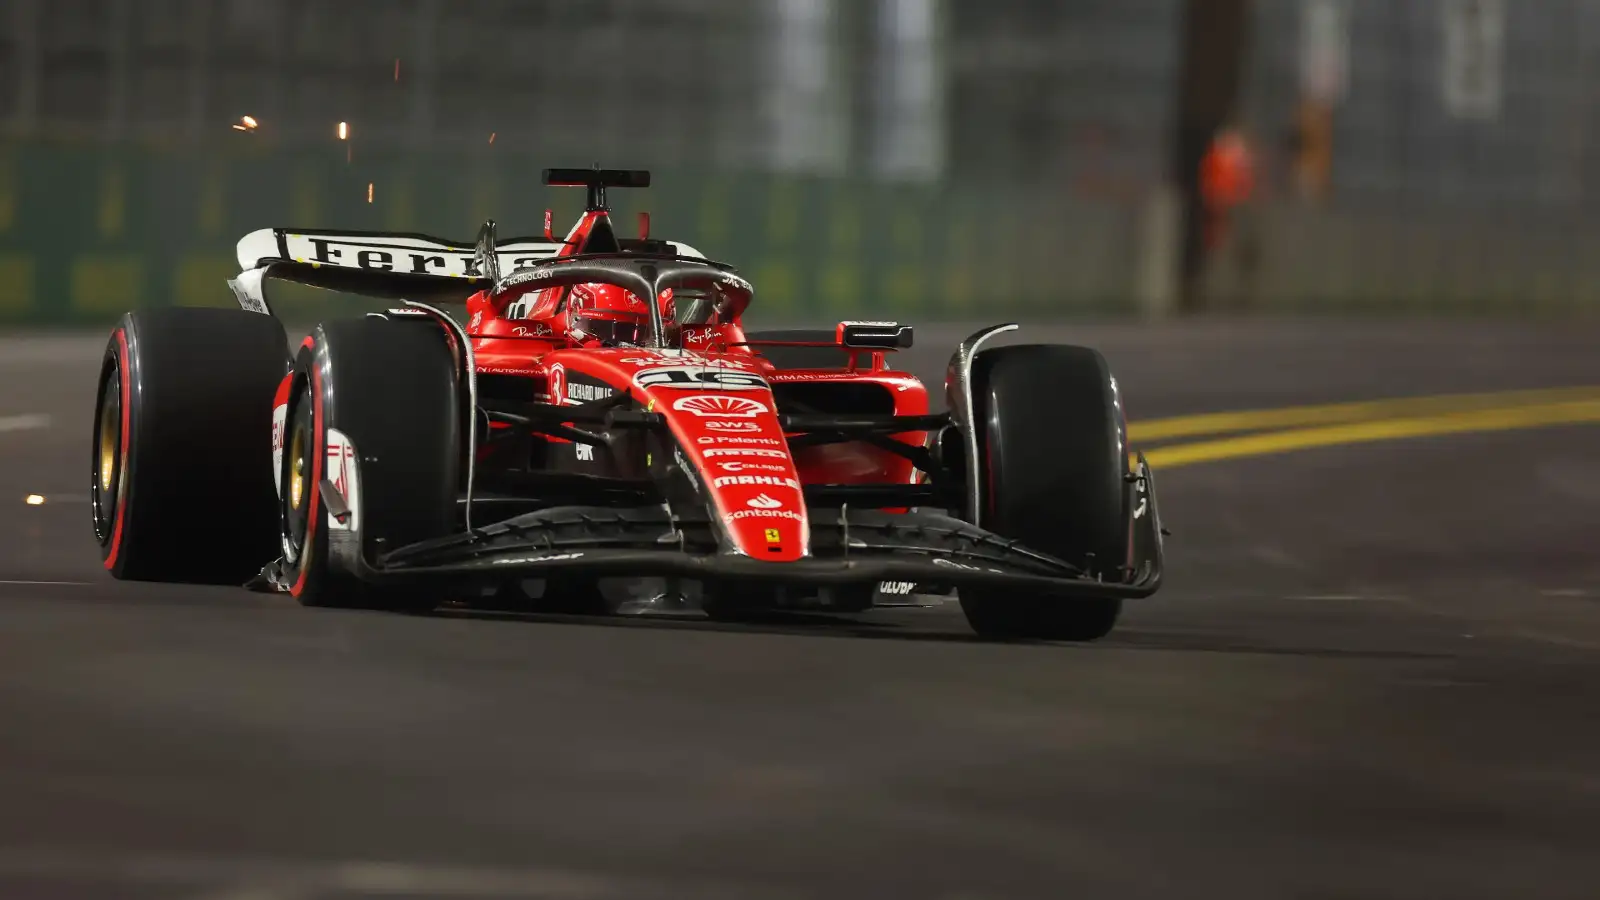 Charles Leclerc races his Ferrari in the Las Vegas Grand Prix.